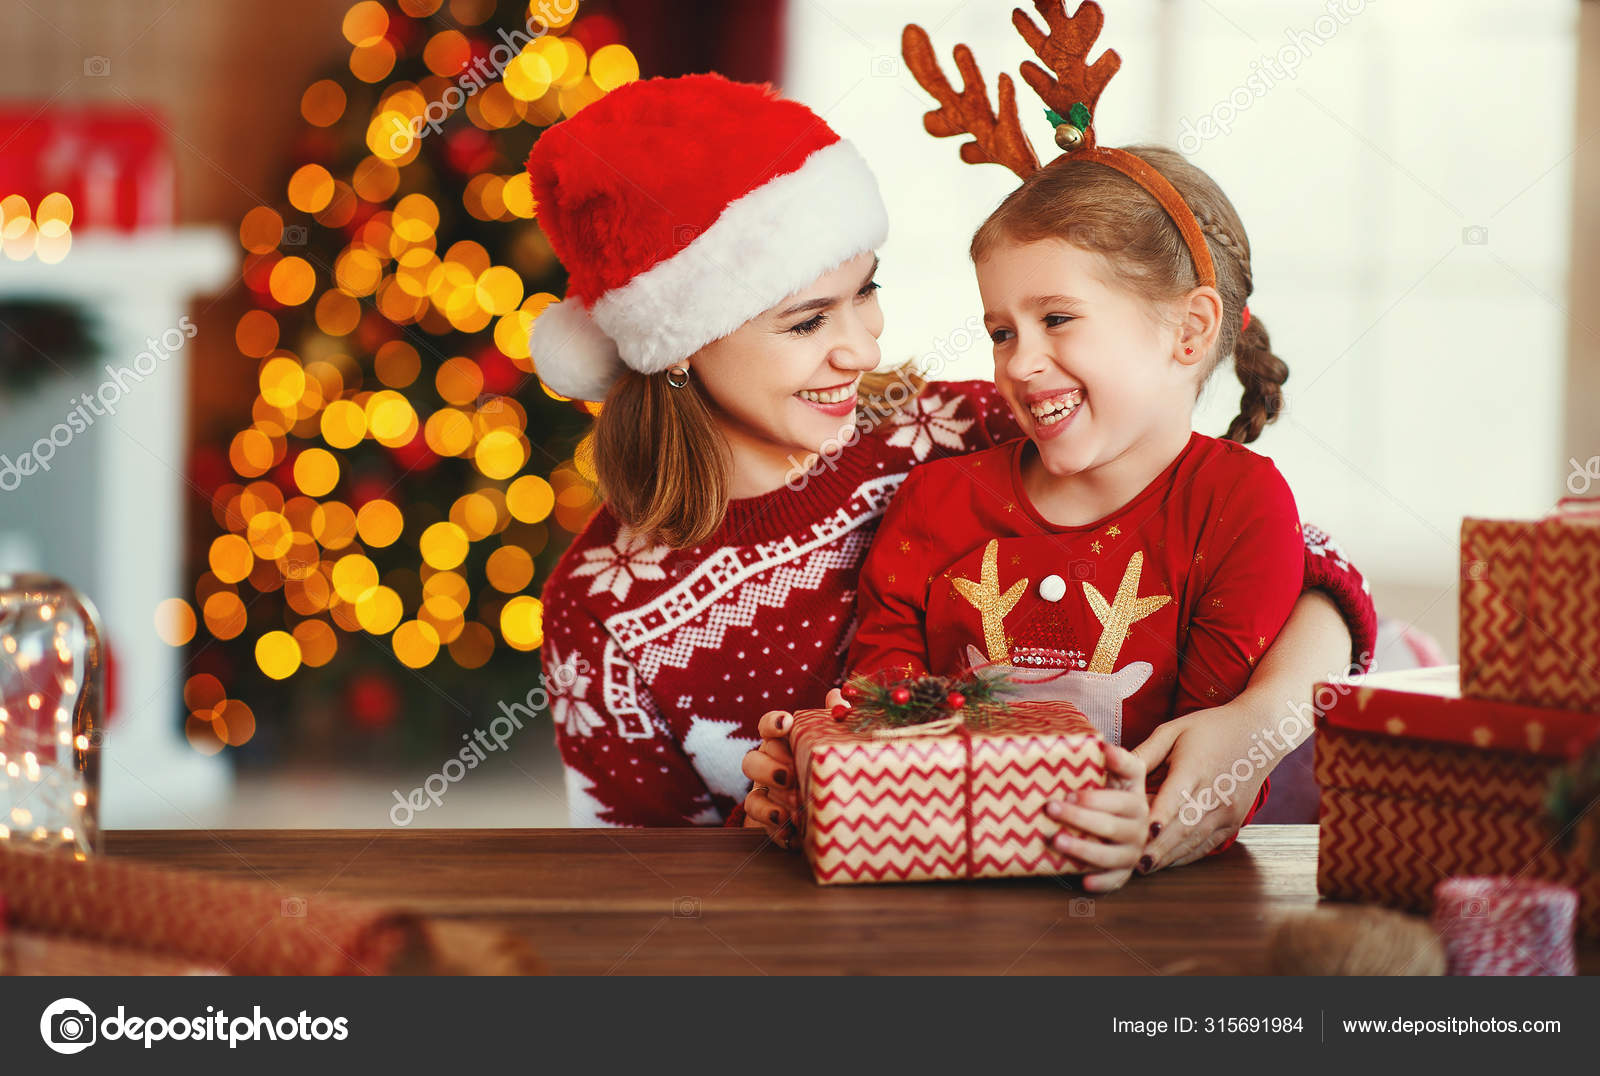 https://st4.depositphotos.com/1189140/31569/i/1600/depositphotos_315691984-stock-photo-happy-family-mother-and-child.jpg